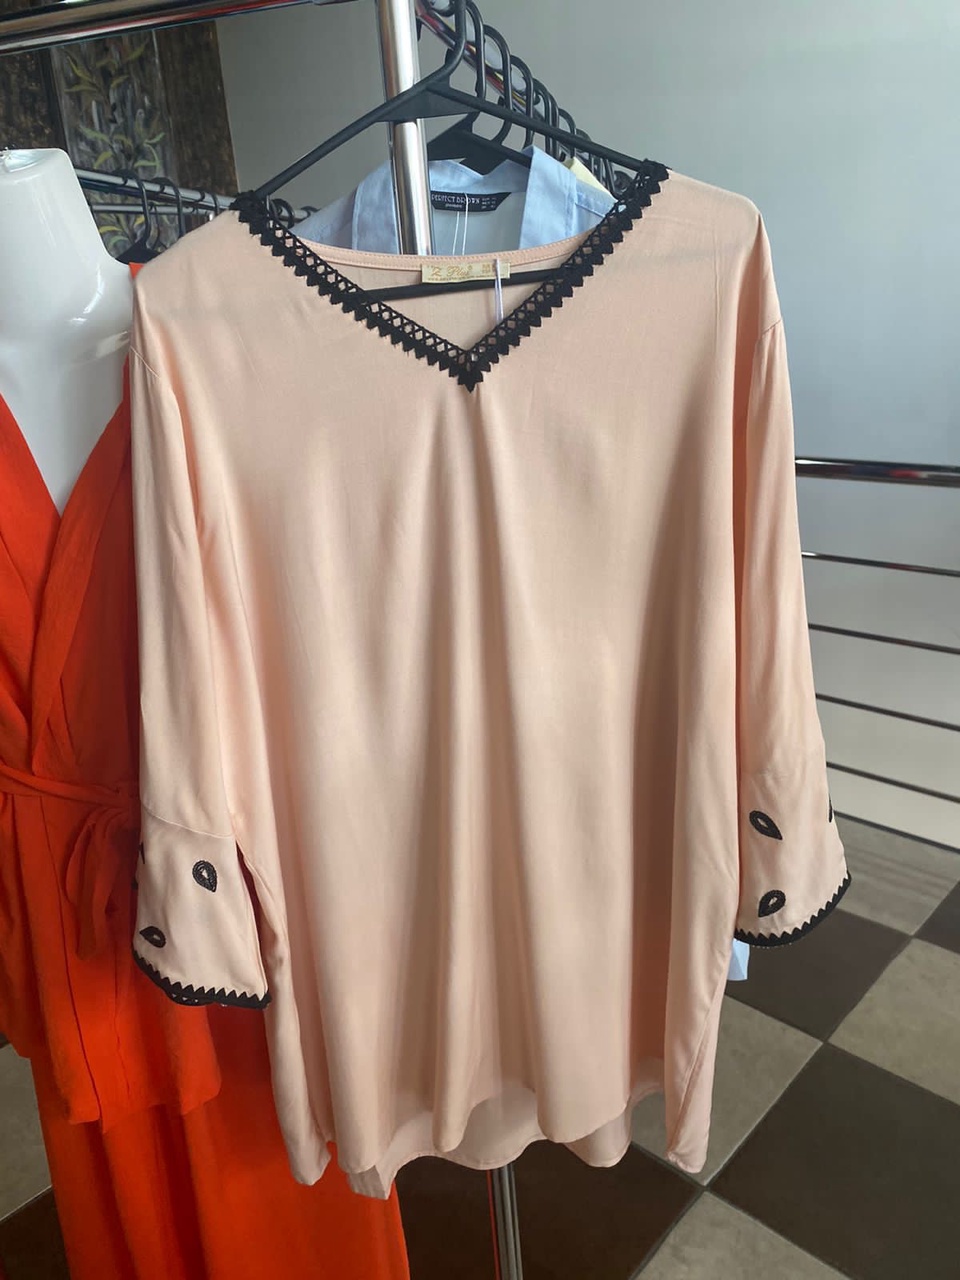 блузка - 1 300 ₽, заказать онлайн.